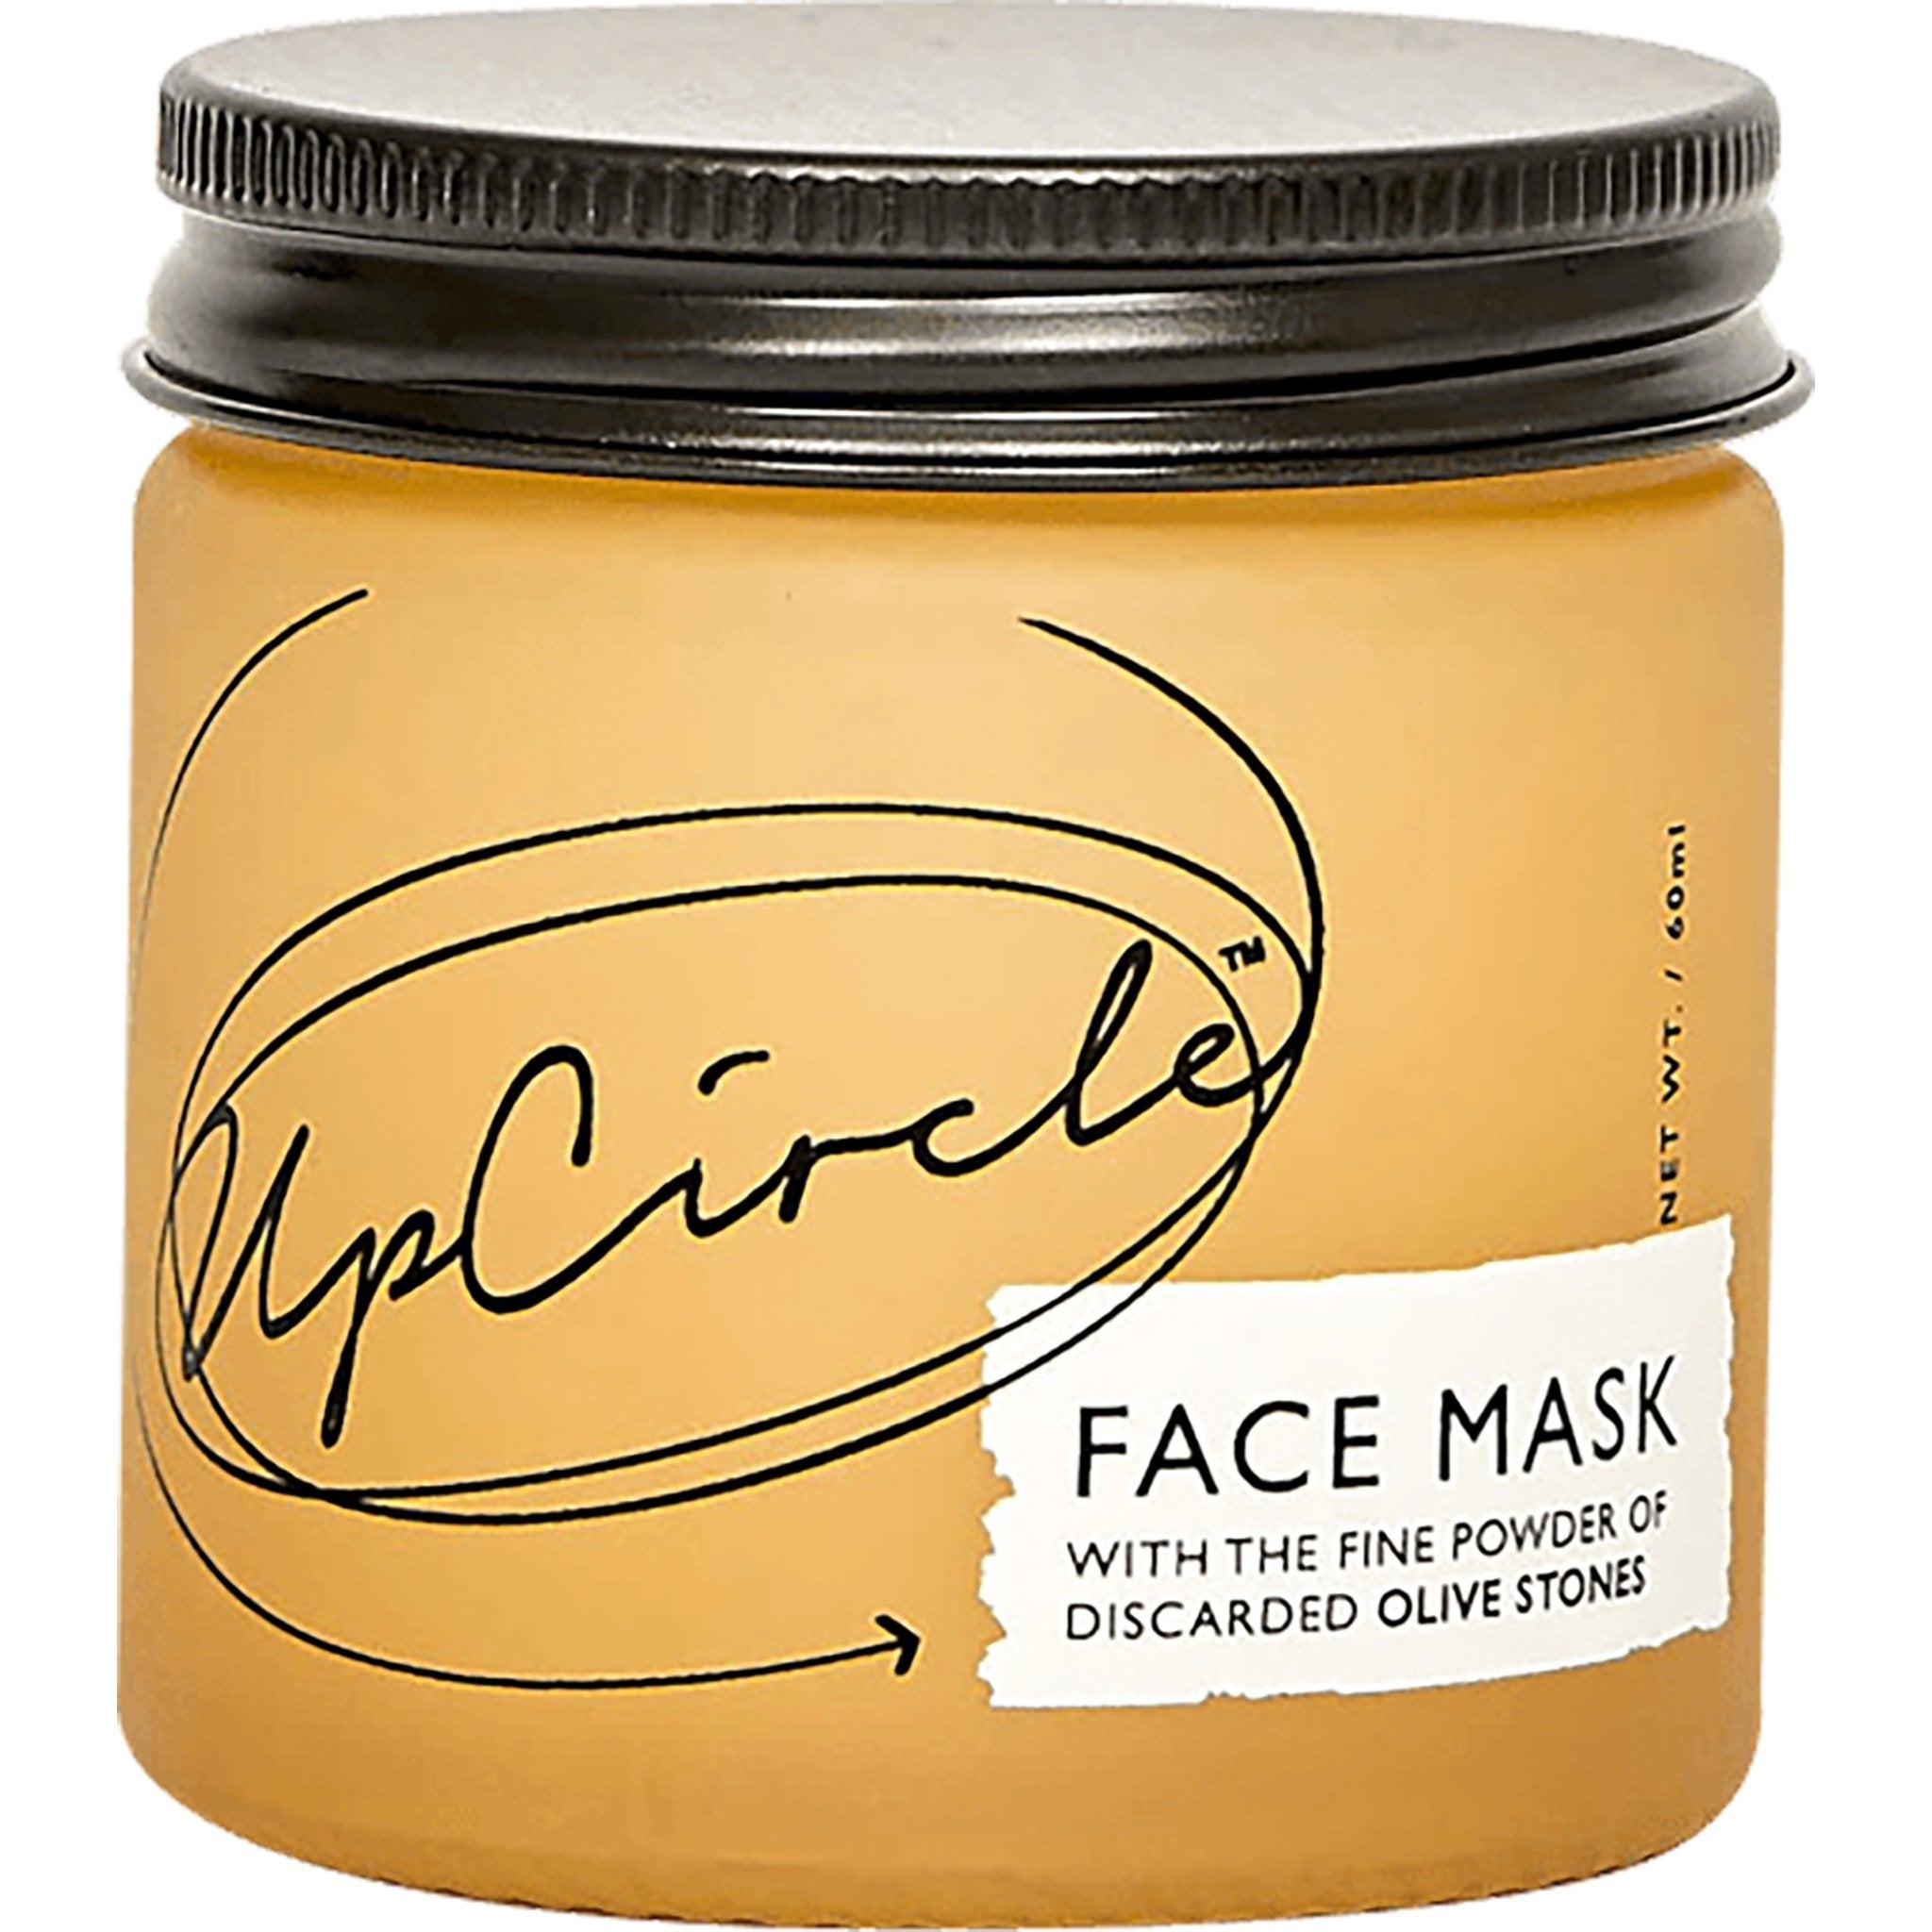 Kaolin Clay Face Mask - mypure.co.uk